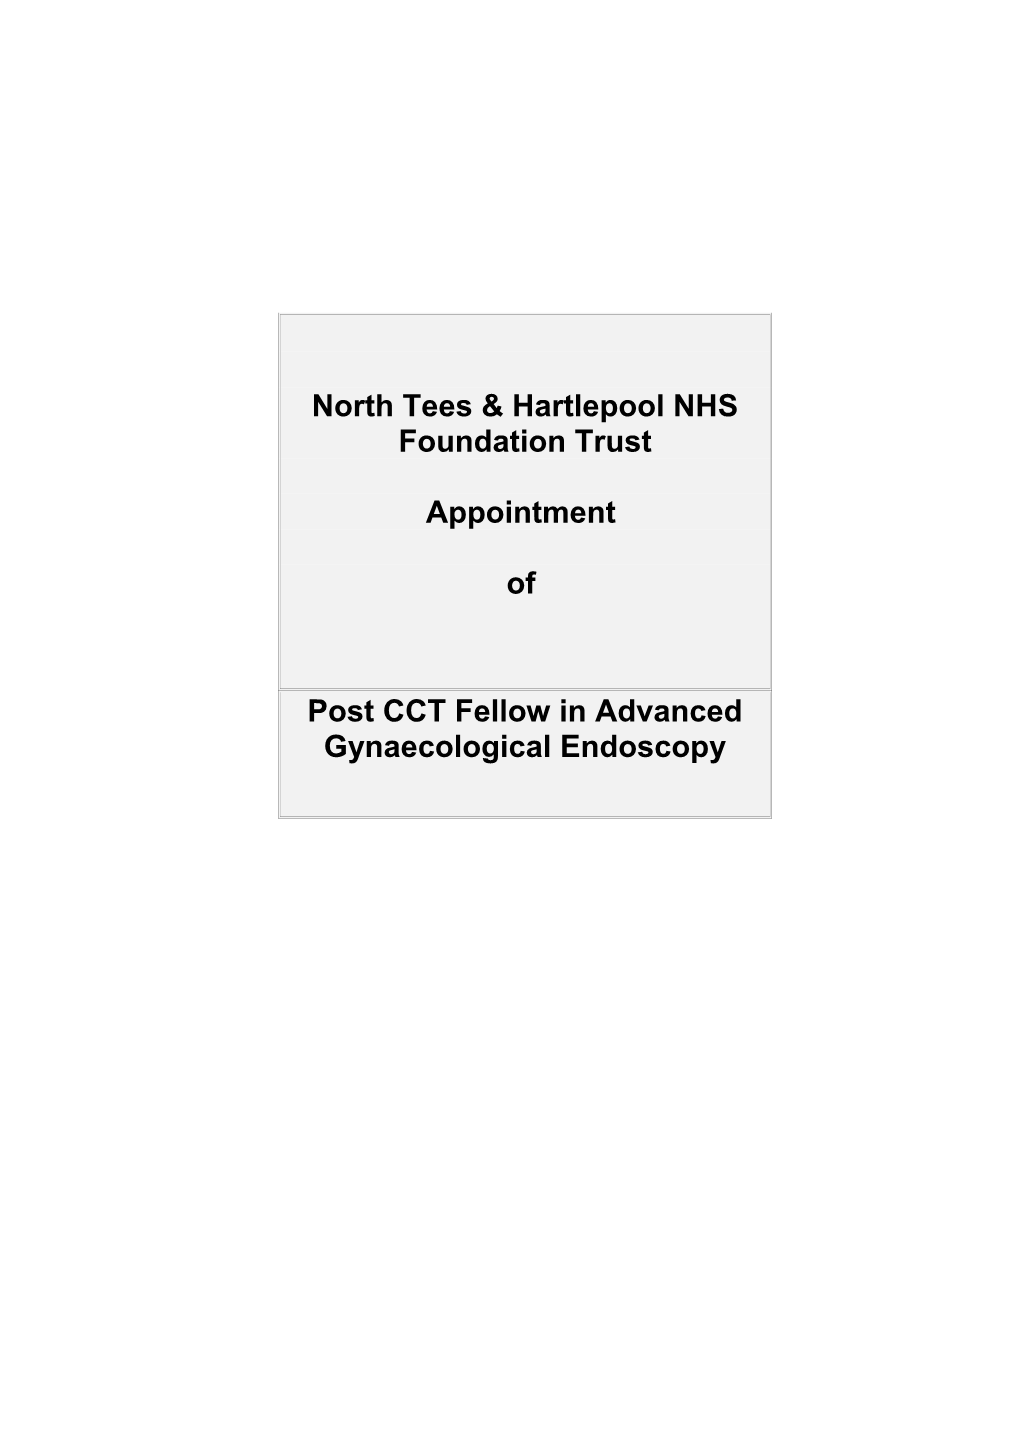 North Tees & Hartlepoolnhs Foundation Trust